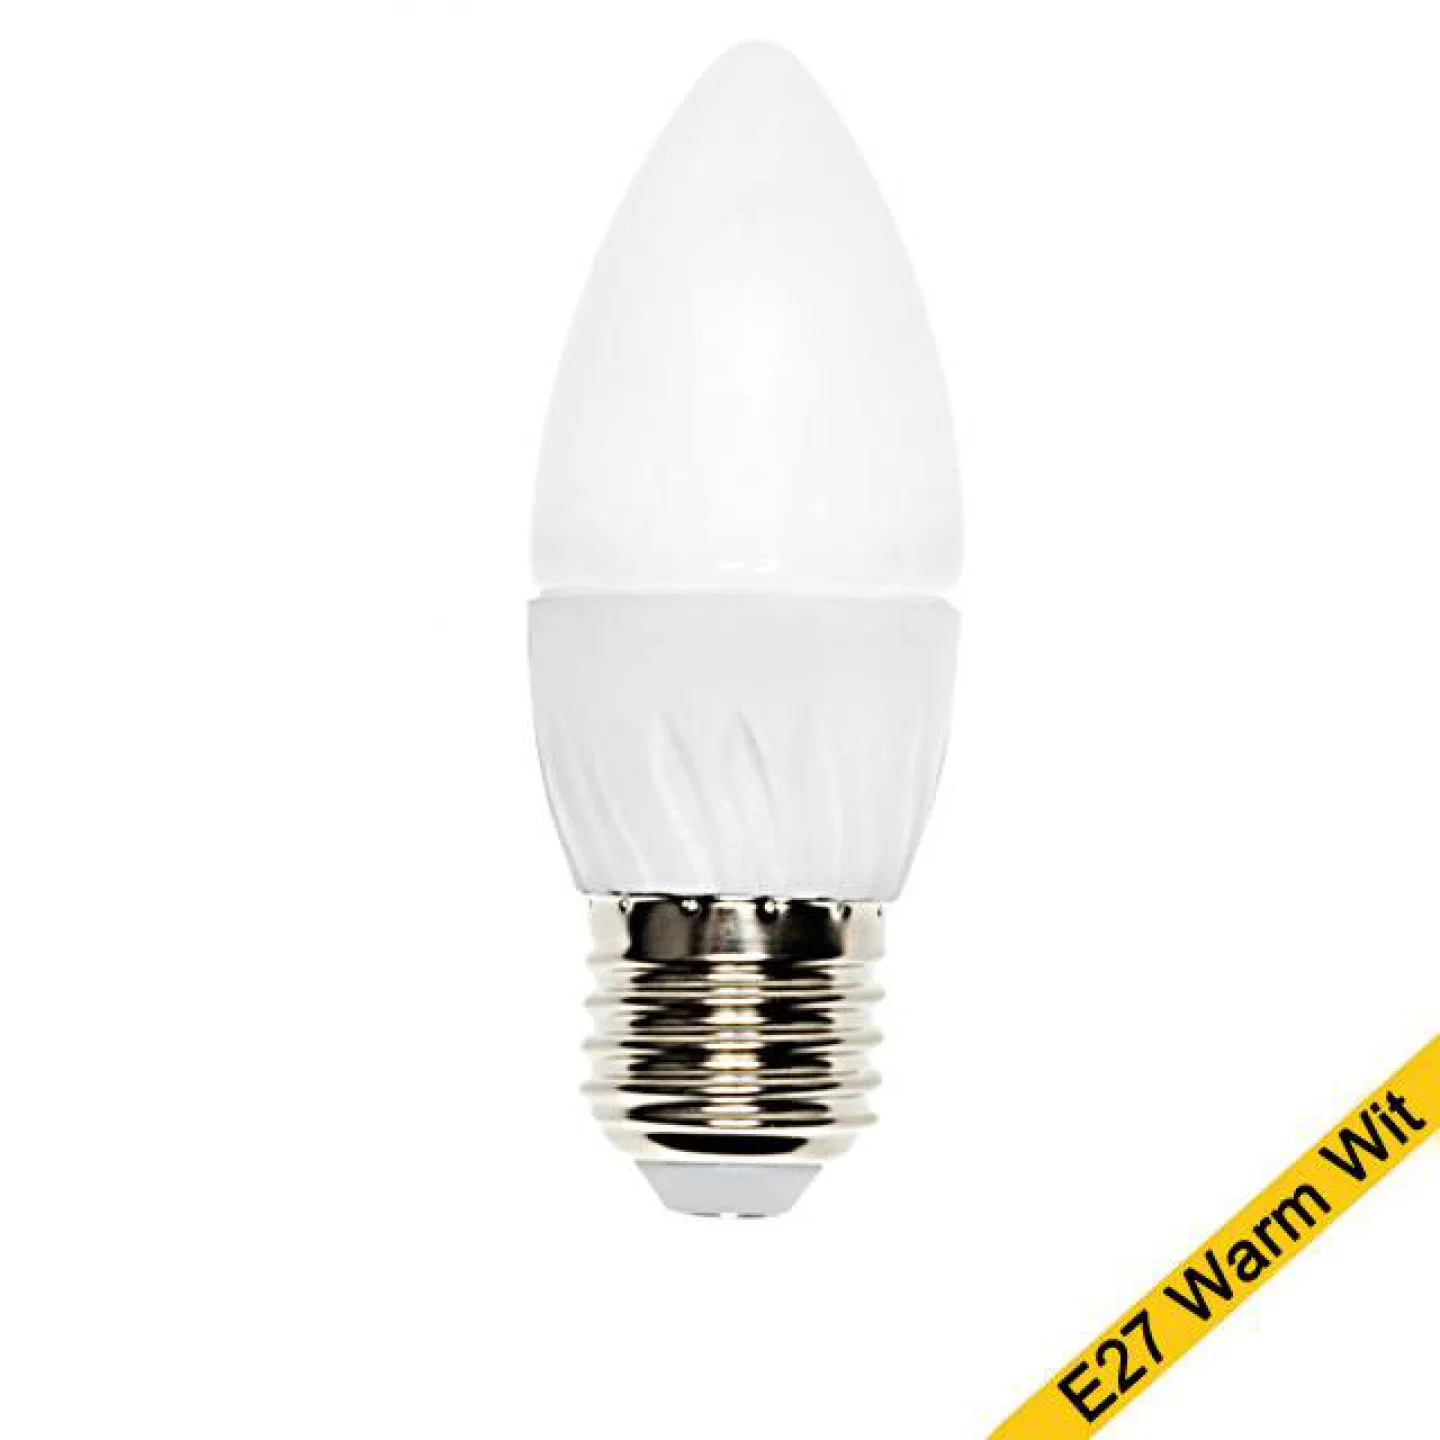 Led kaarslamp 4W E27 warm wit licht.